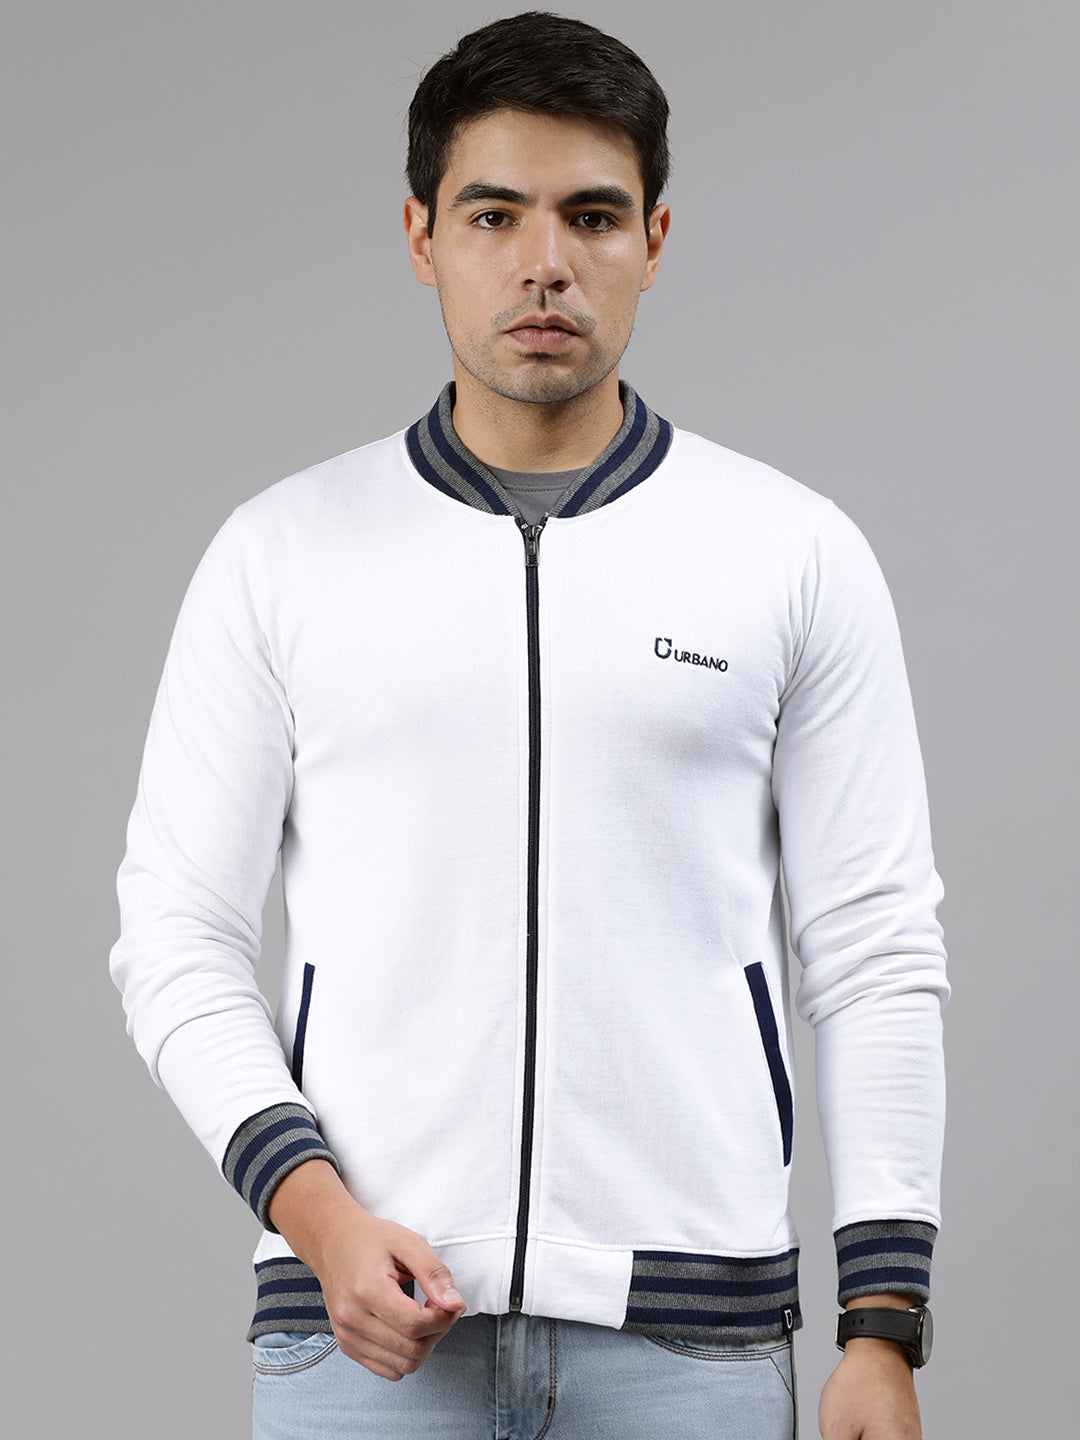 Urbano Fashion Men's White Cotton Zippered Varsity Sweatshirt